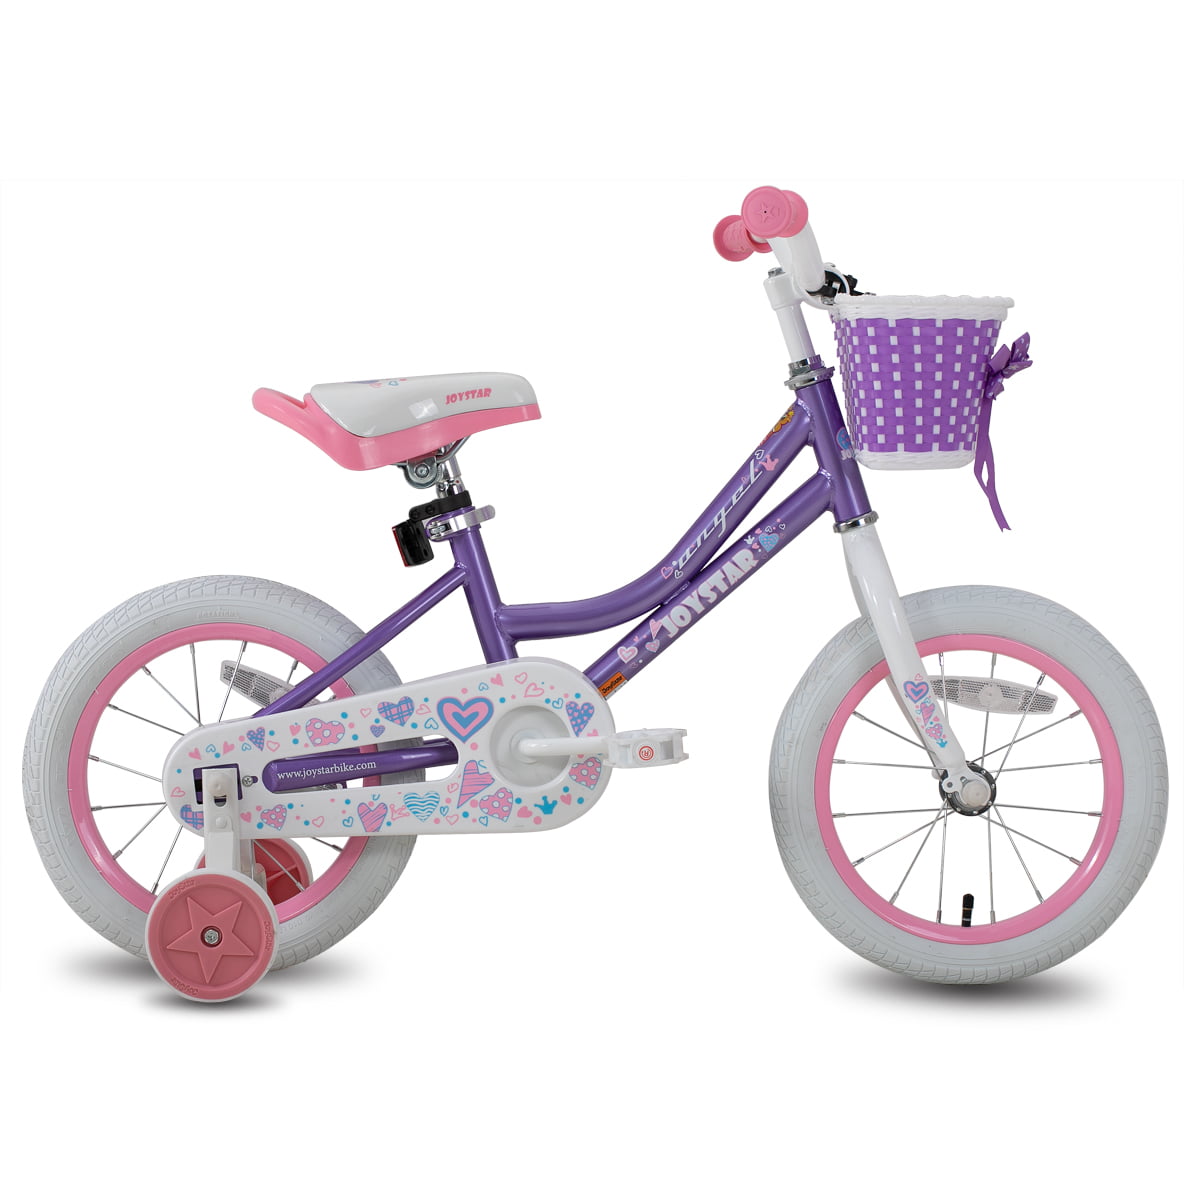 Joystar Angel 12 Inch Ages 2 to 4 Kids Bike with Training Wheels Open Box 